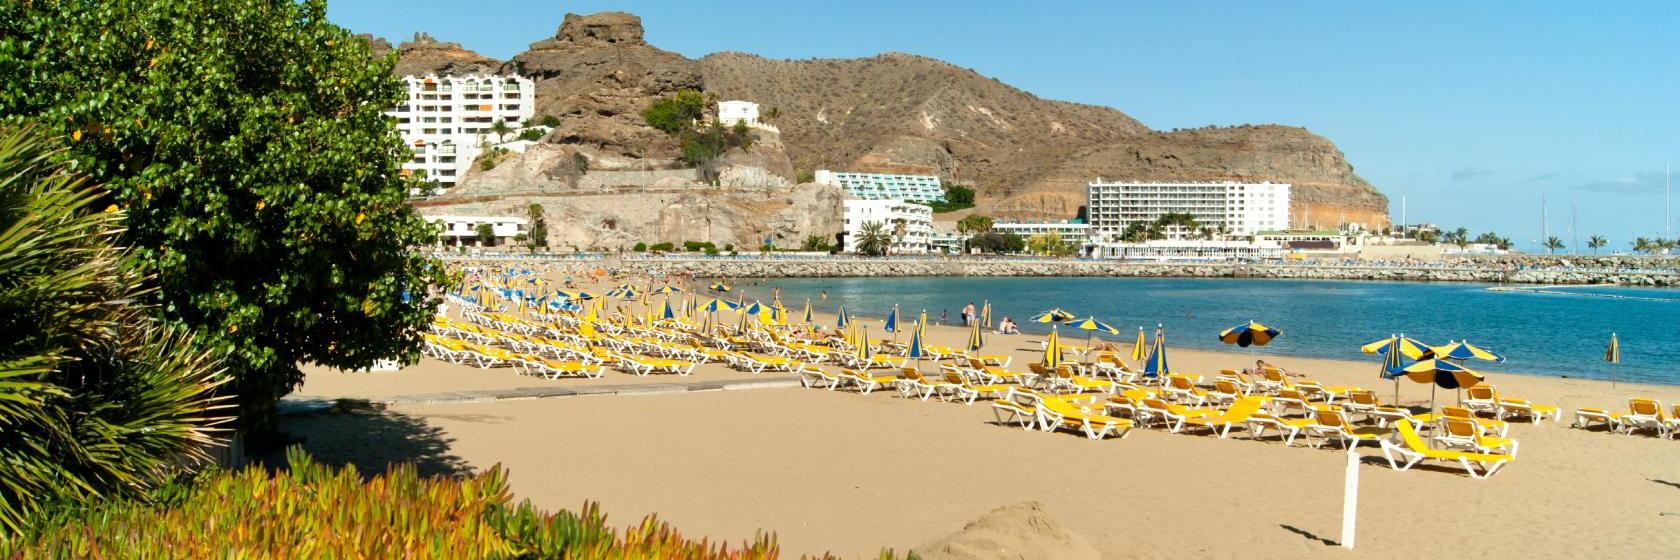 10 Best Puerto Rico de Gran Canaria Hotels, Spain (From $69)